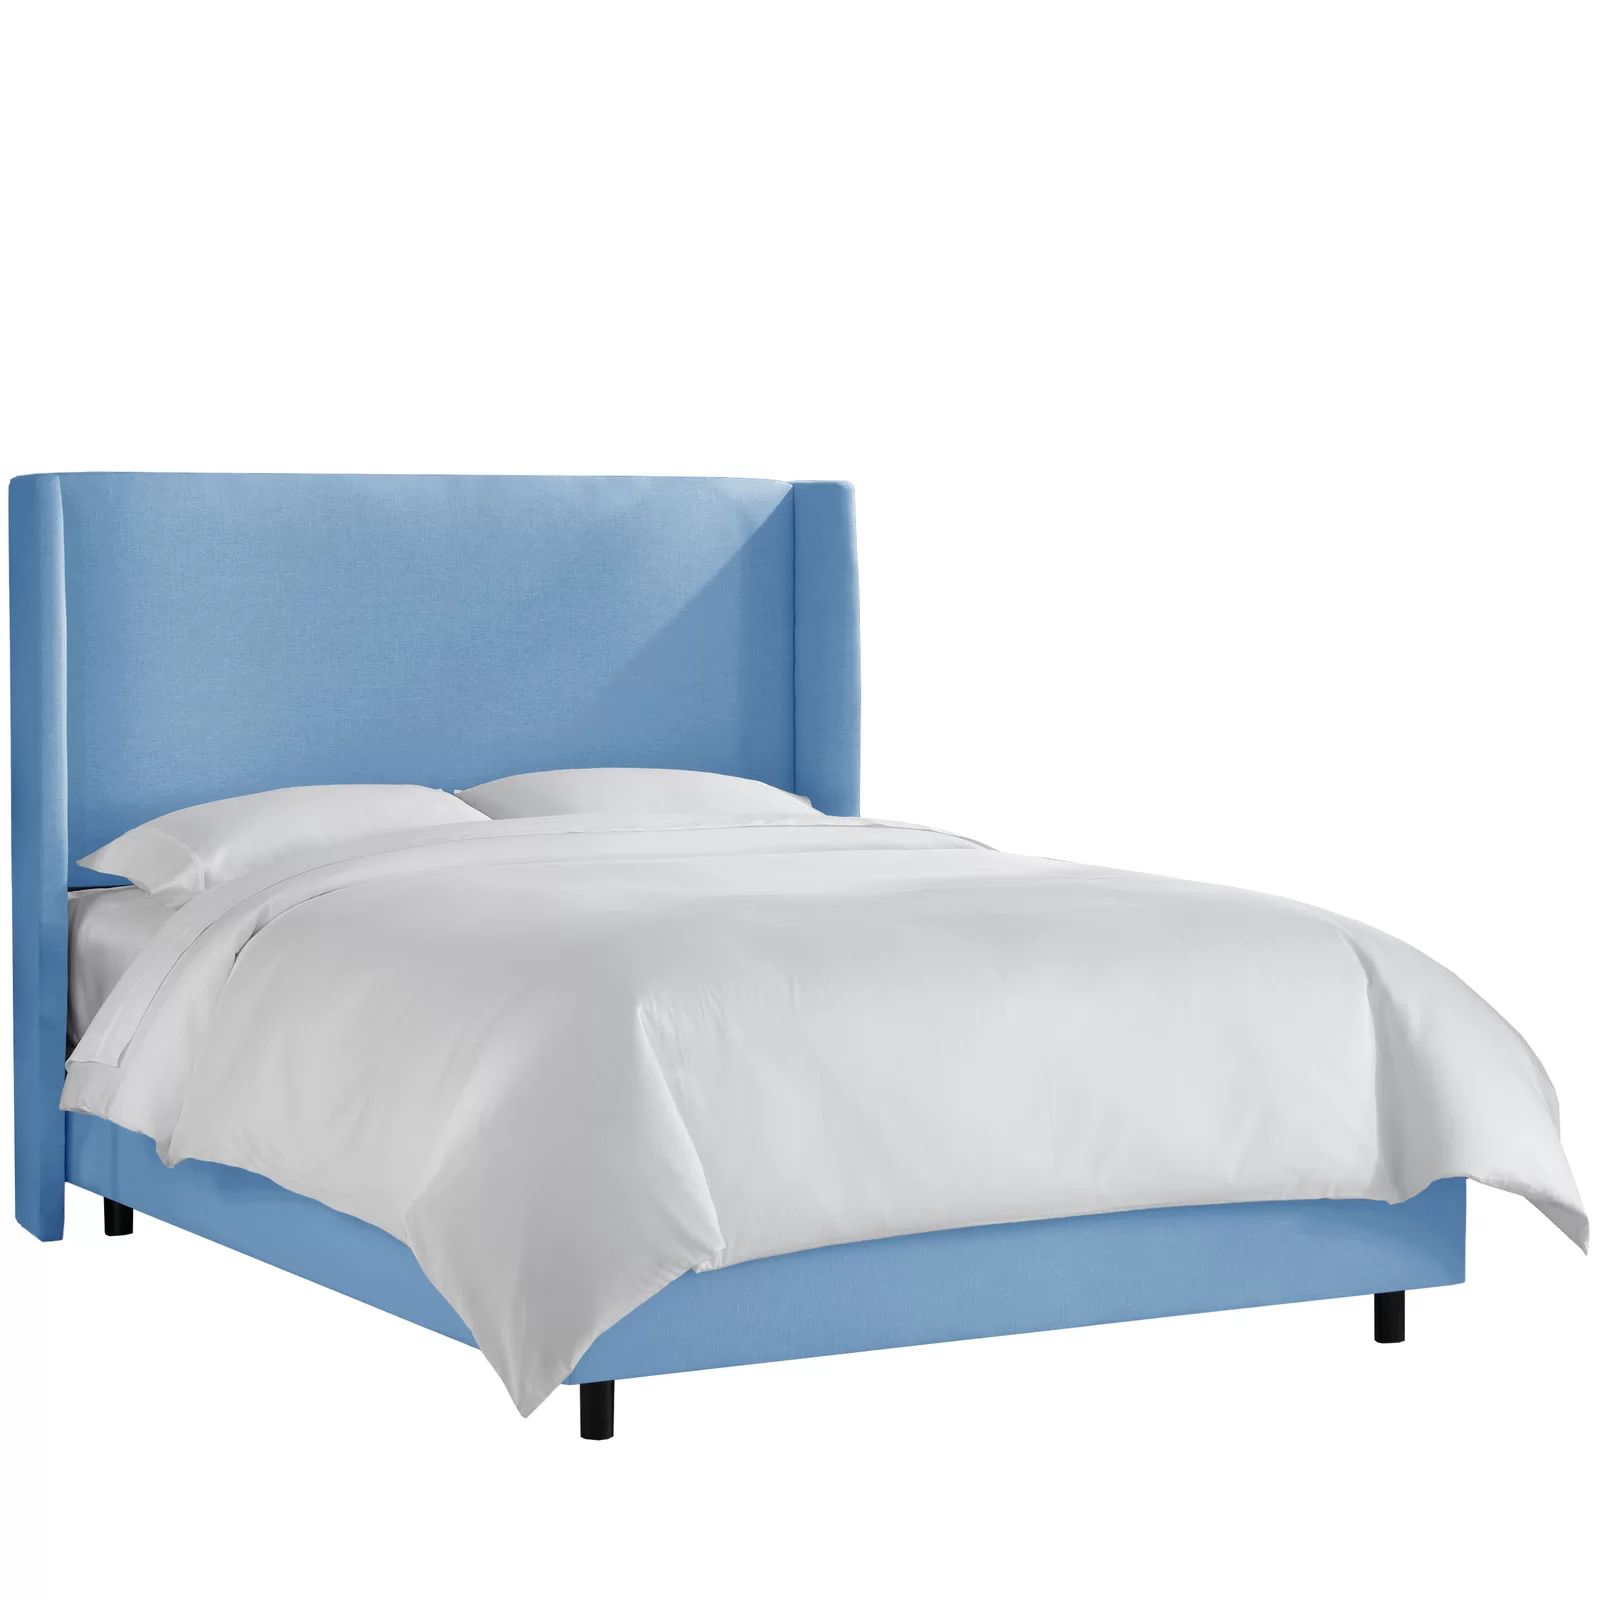 Holst Upholstered Low Profile Standard Bed | Wayfair North America